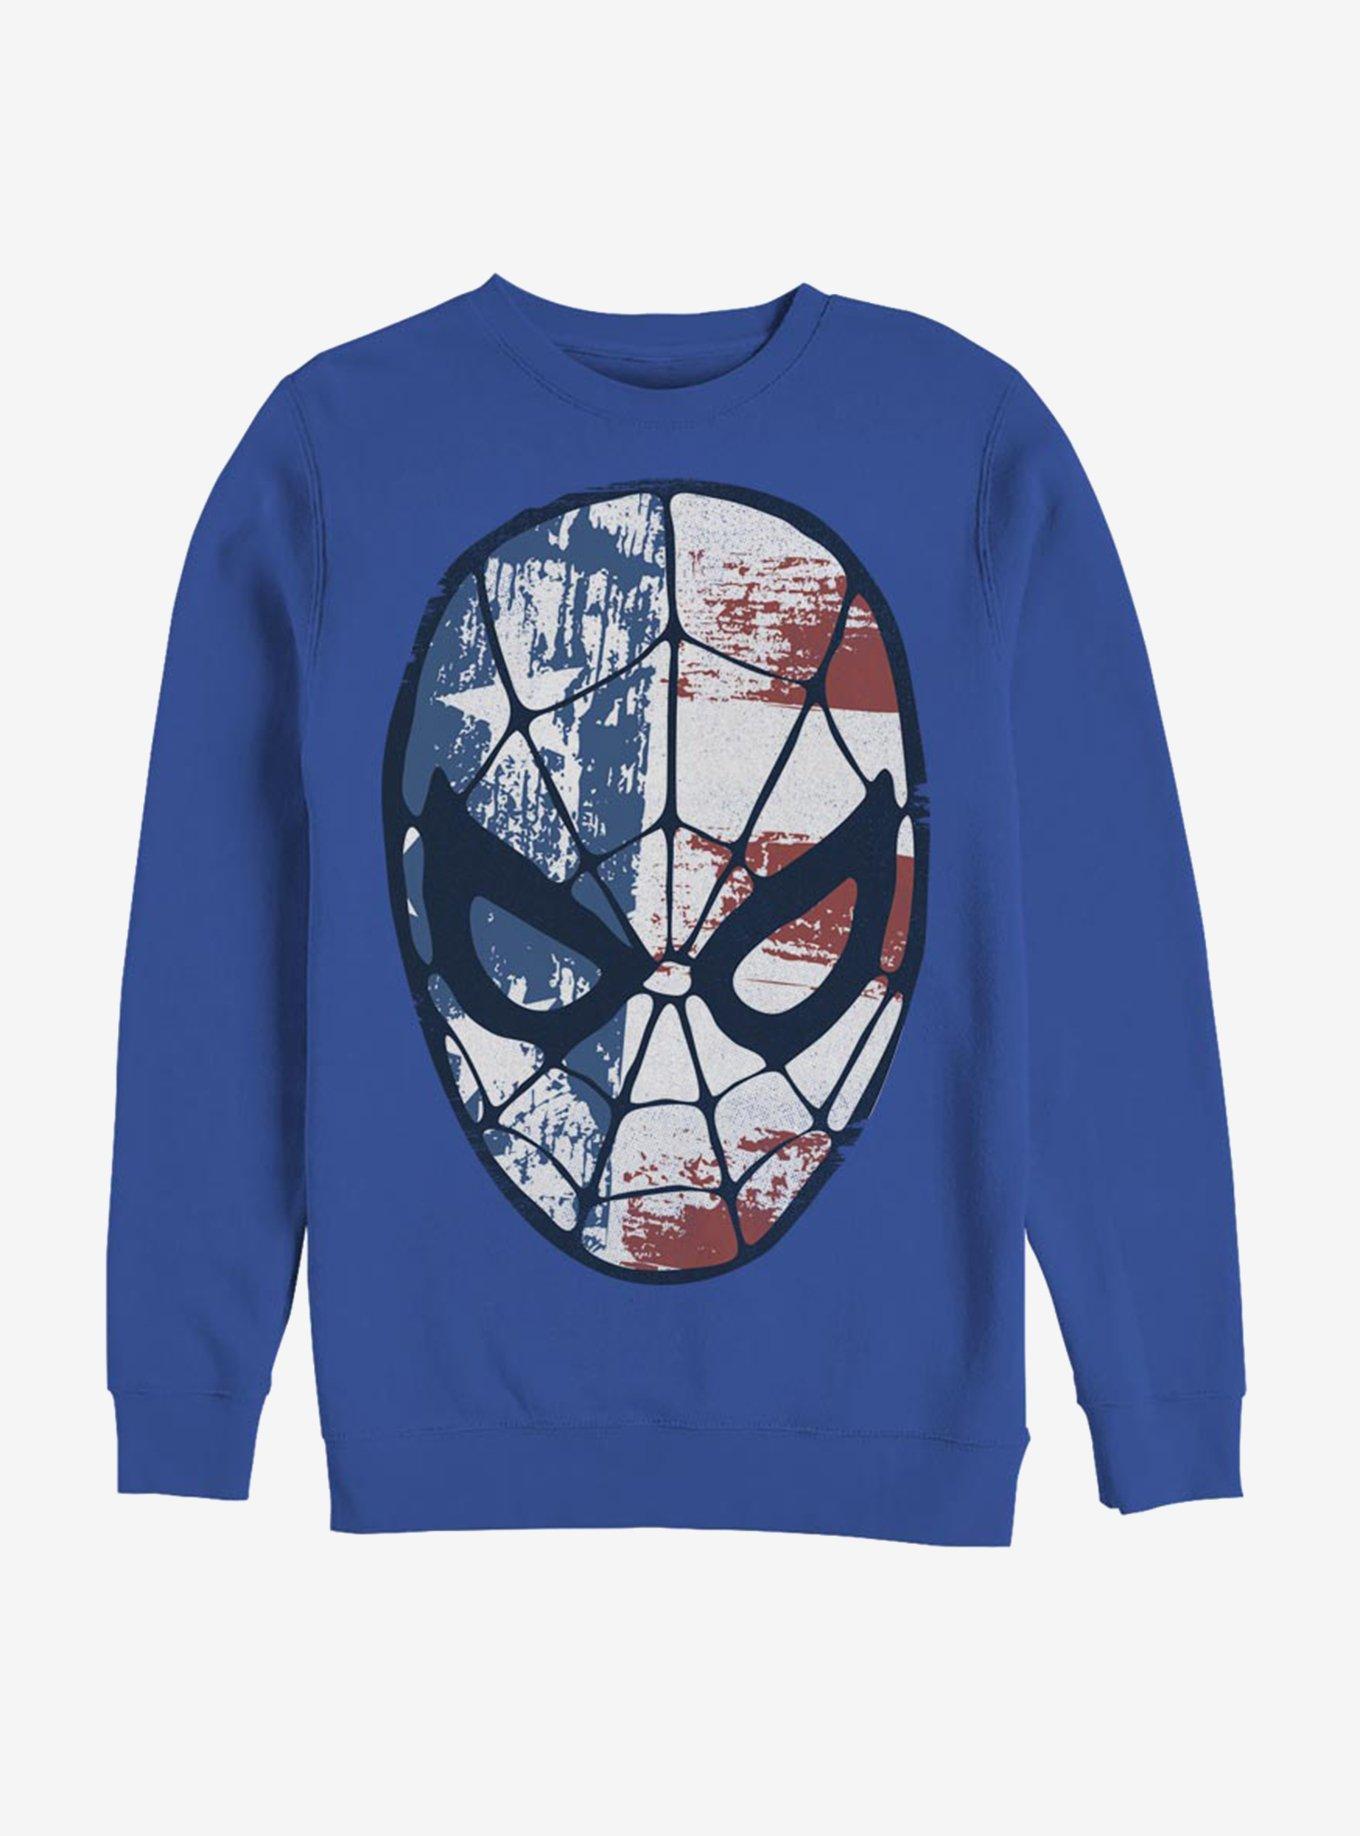 Marvel Spider-Man American Flag Face Sweatshirt, , hi-res